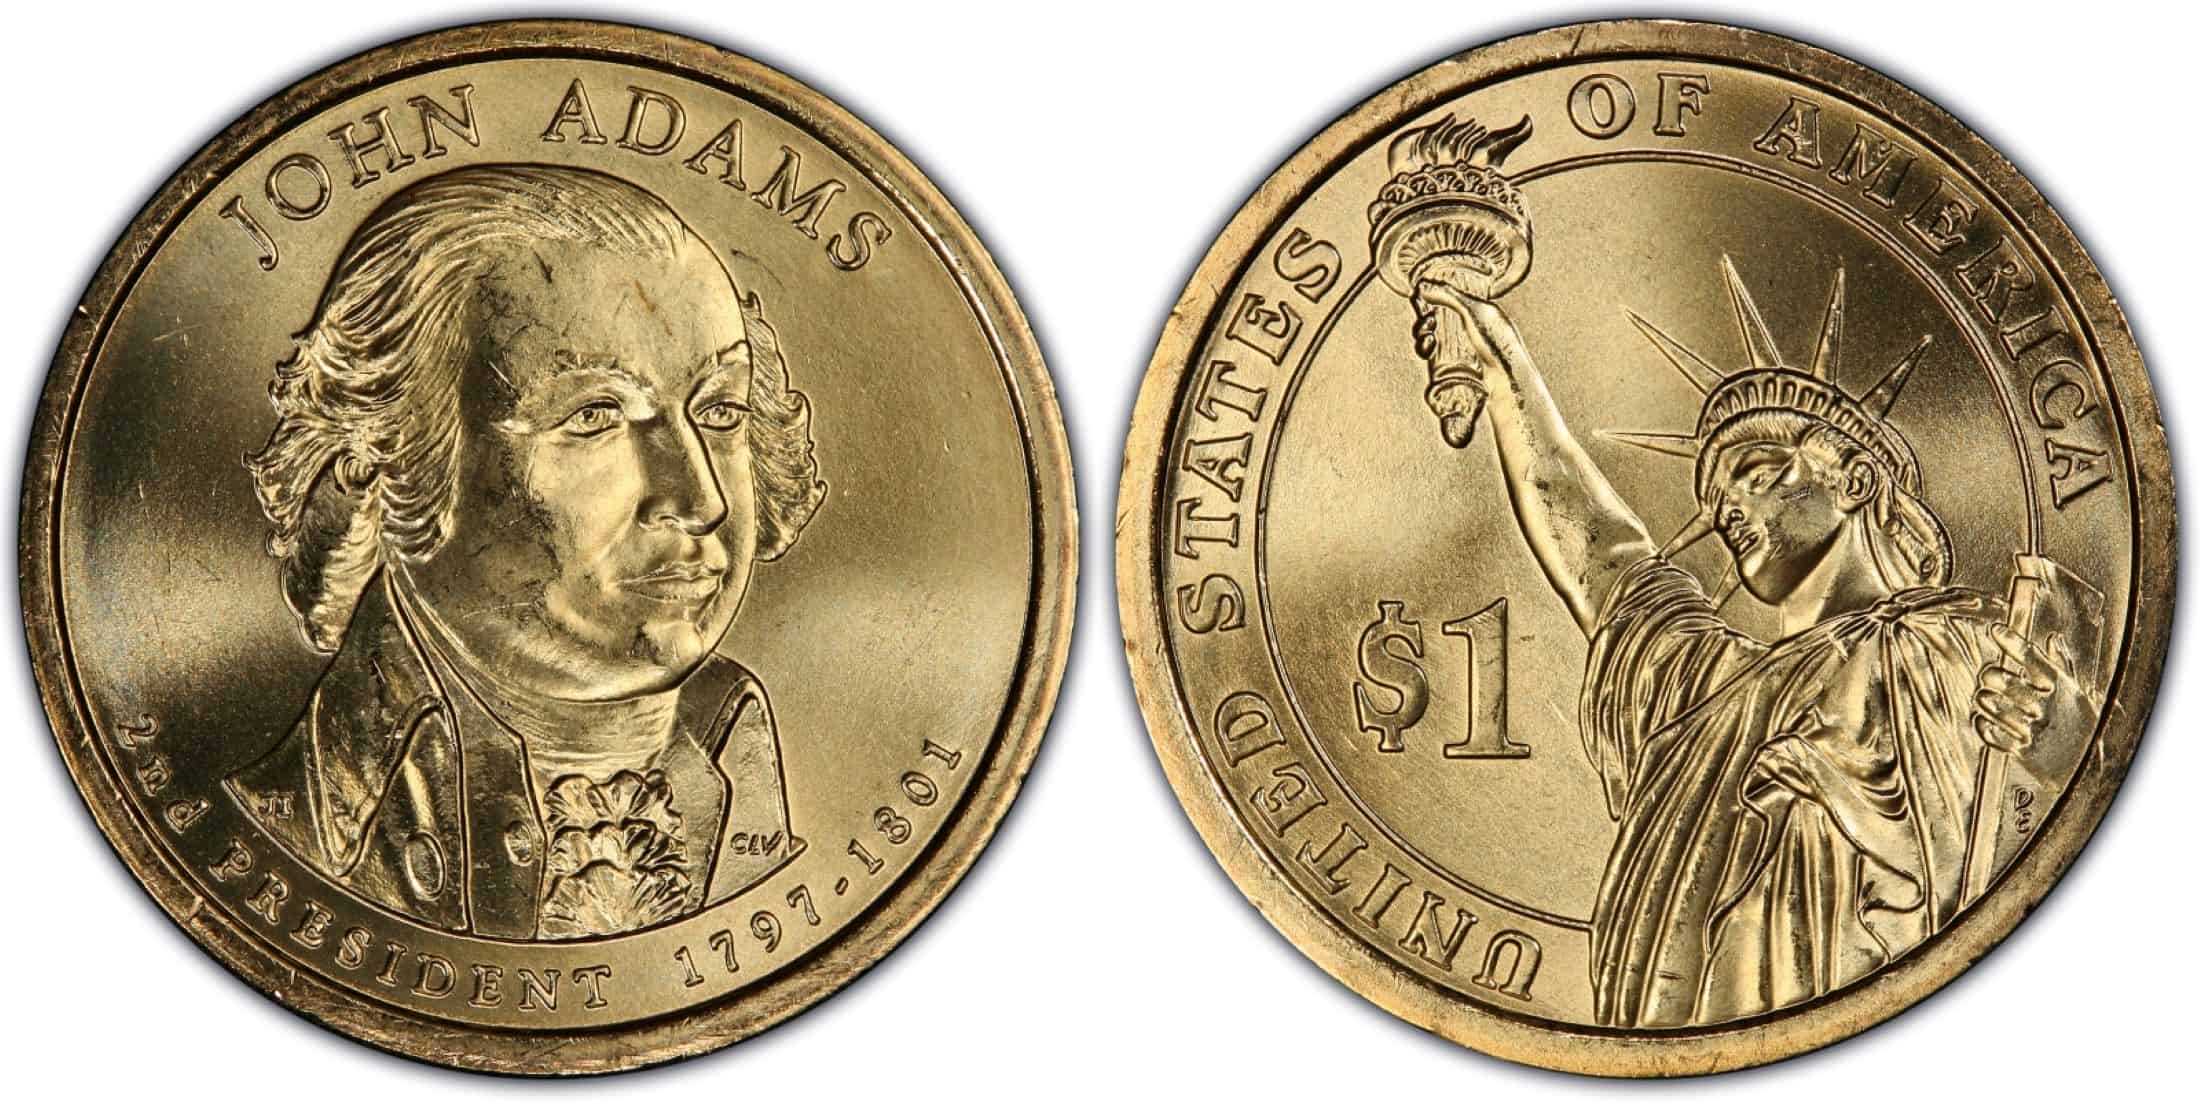 John Adams Dollar Coin Inverted Double Edge Lettering Error